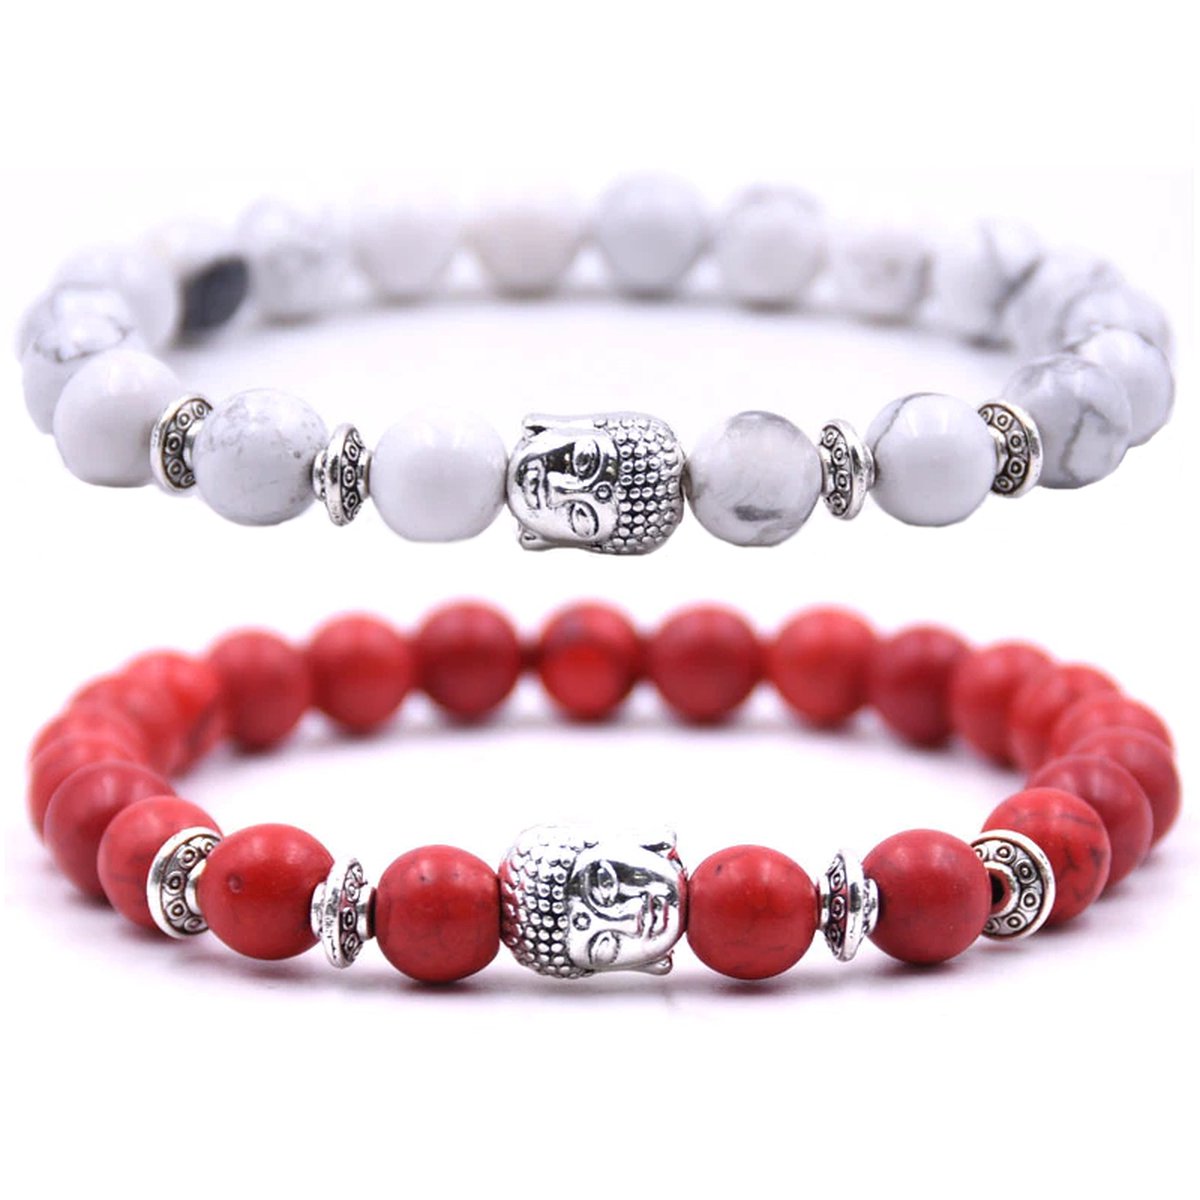 Armband heren / dames / unisex - met buddha bedel - Kralen armband boedha - Chakra armband - Cadeau voor hem of haar - Armbandenset 2 bandjes - Wit marmer & rood